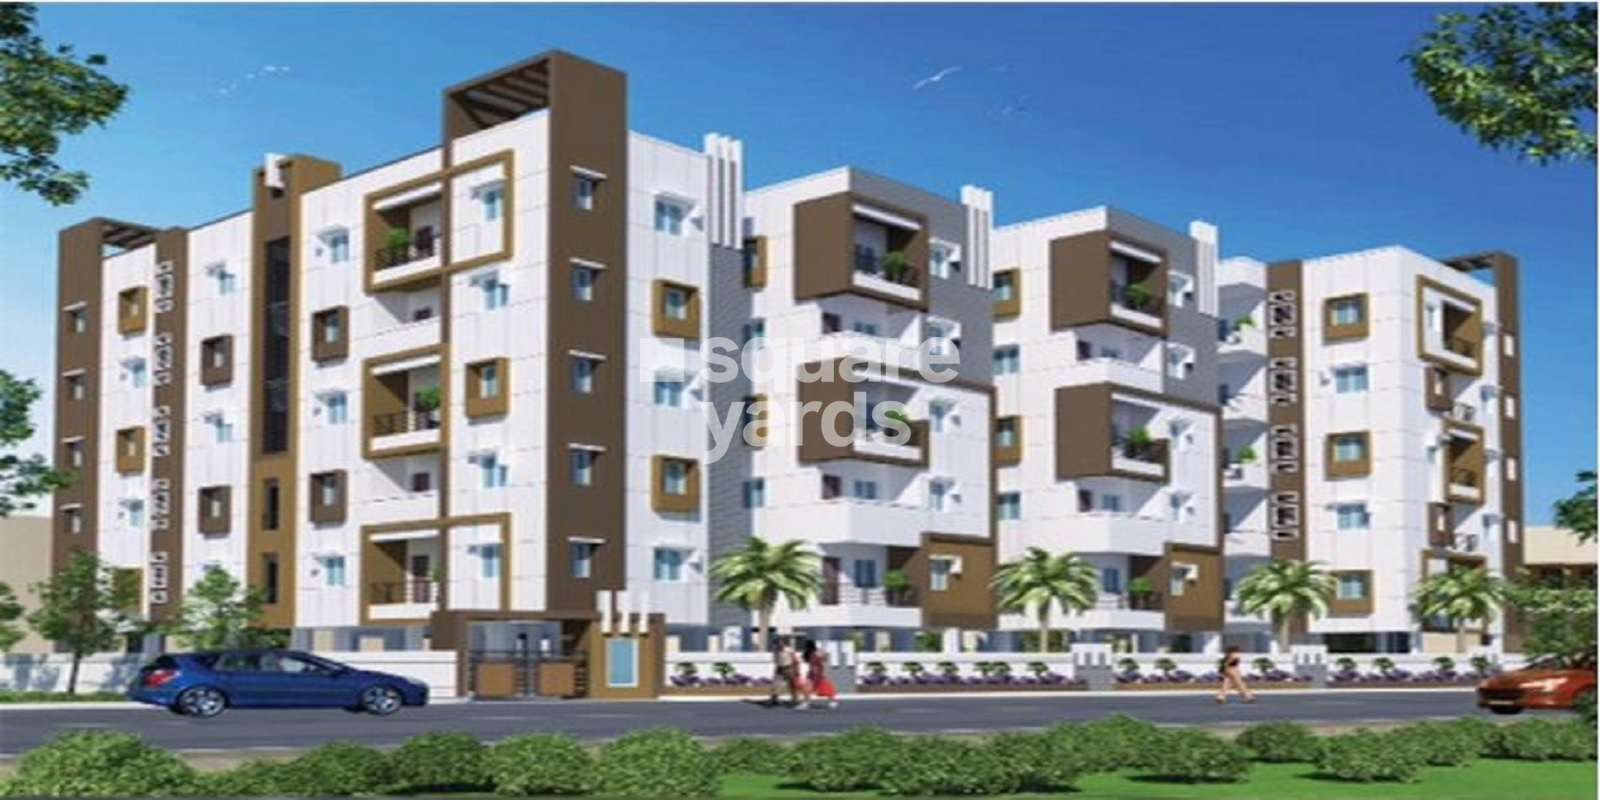 Venkata Sai Apartment Cover Image